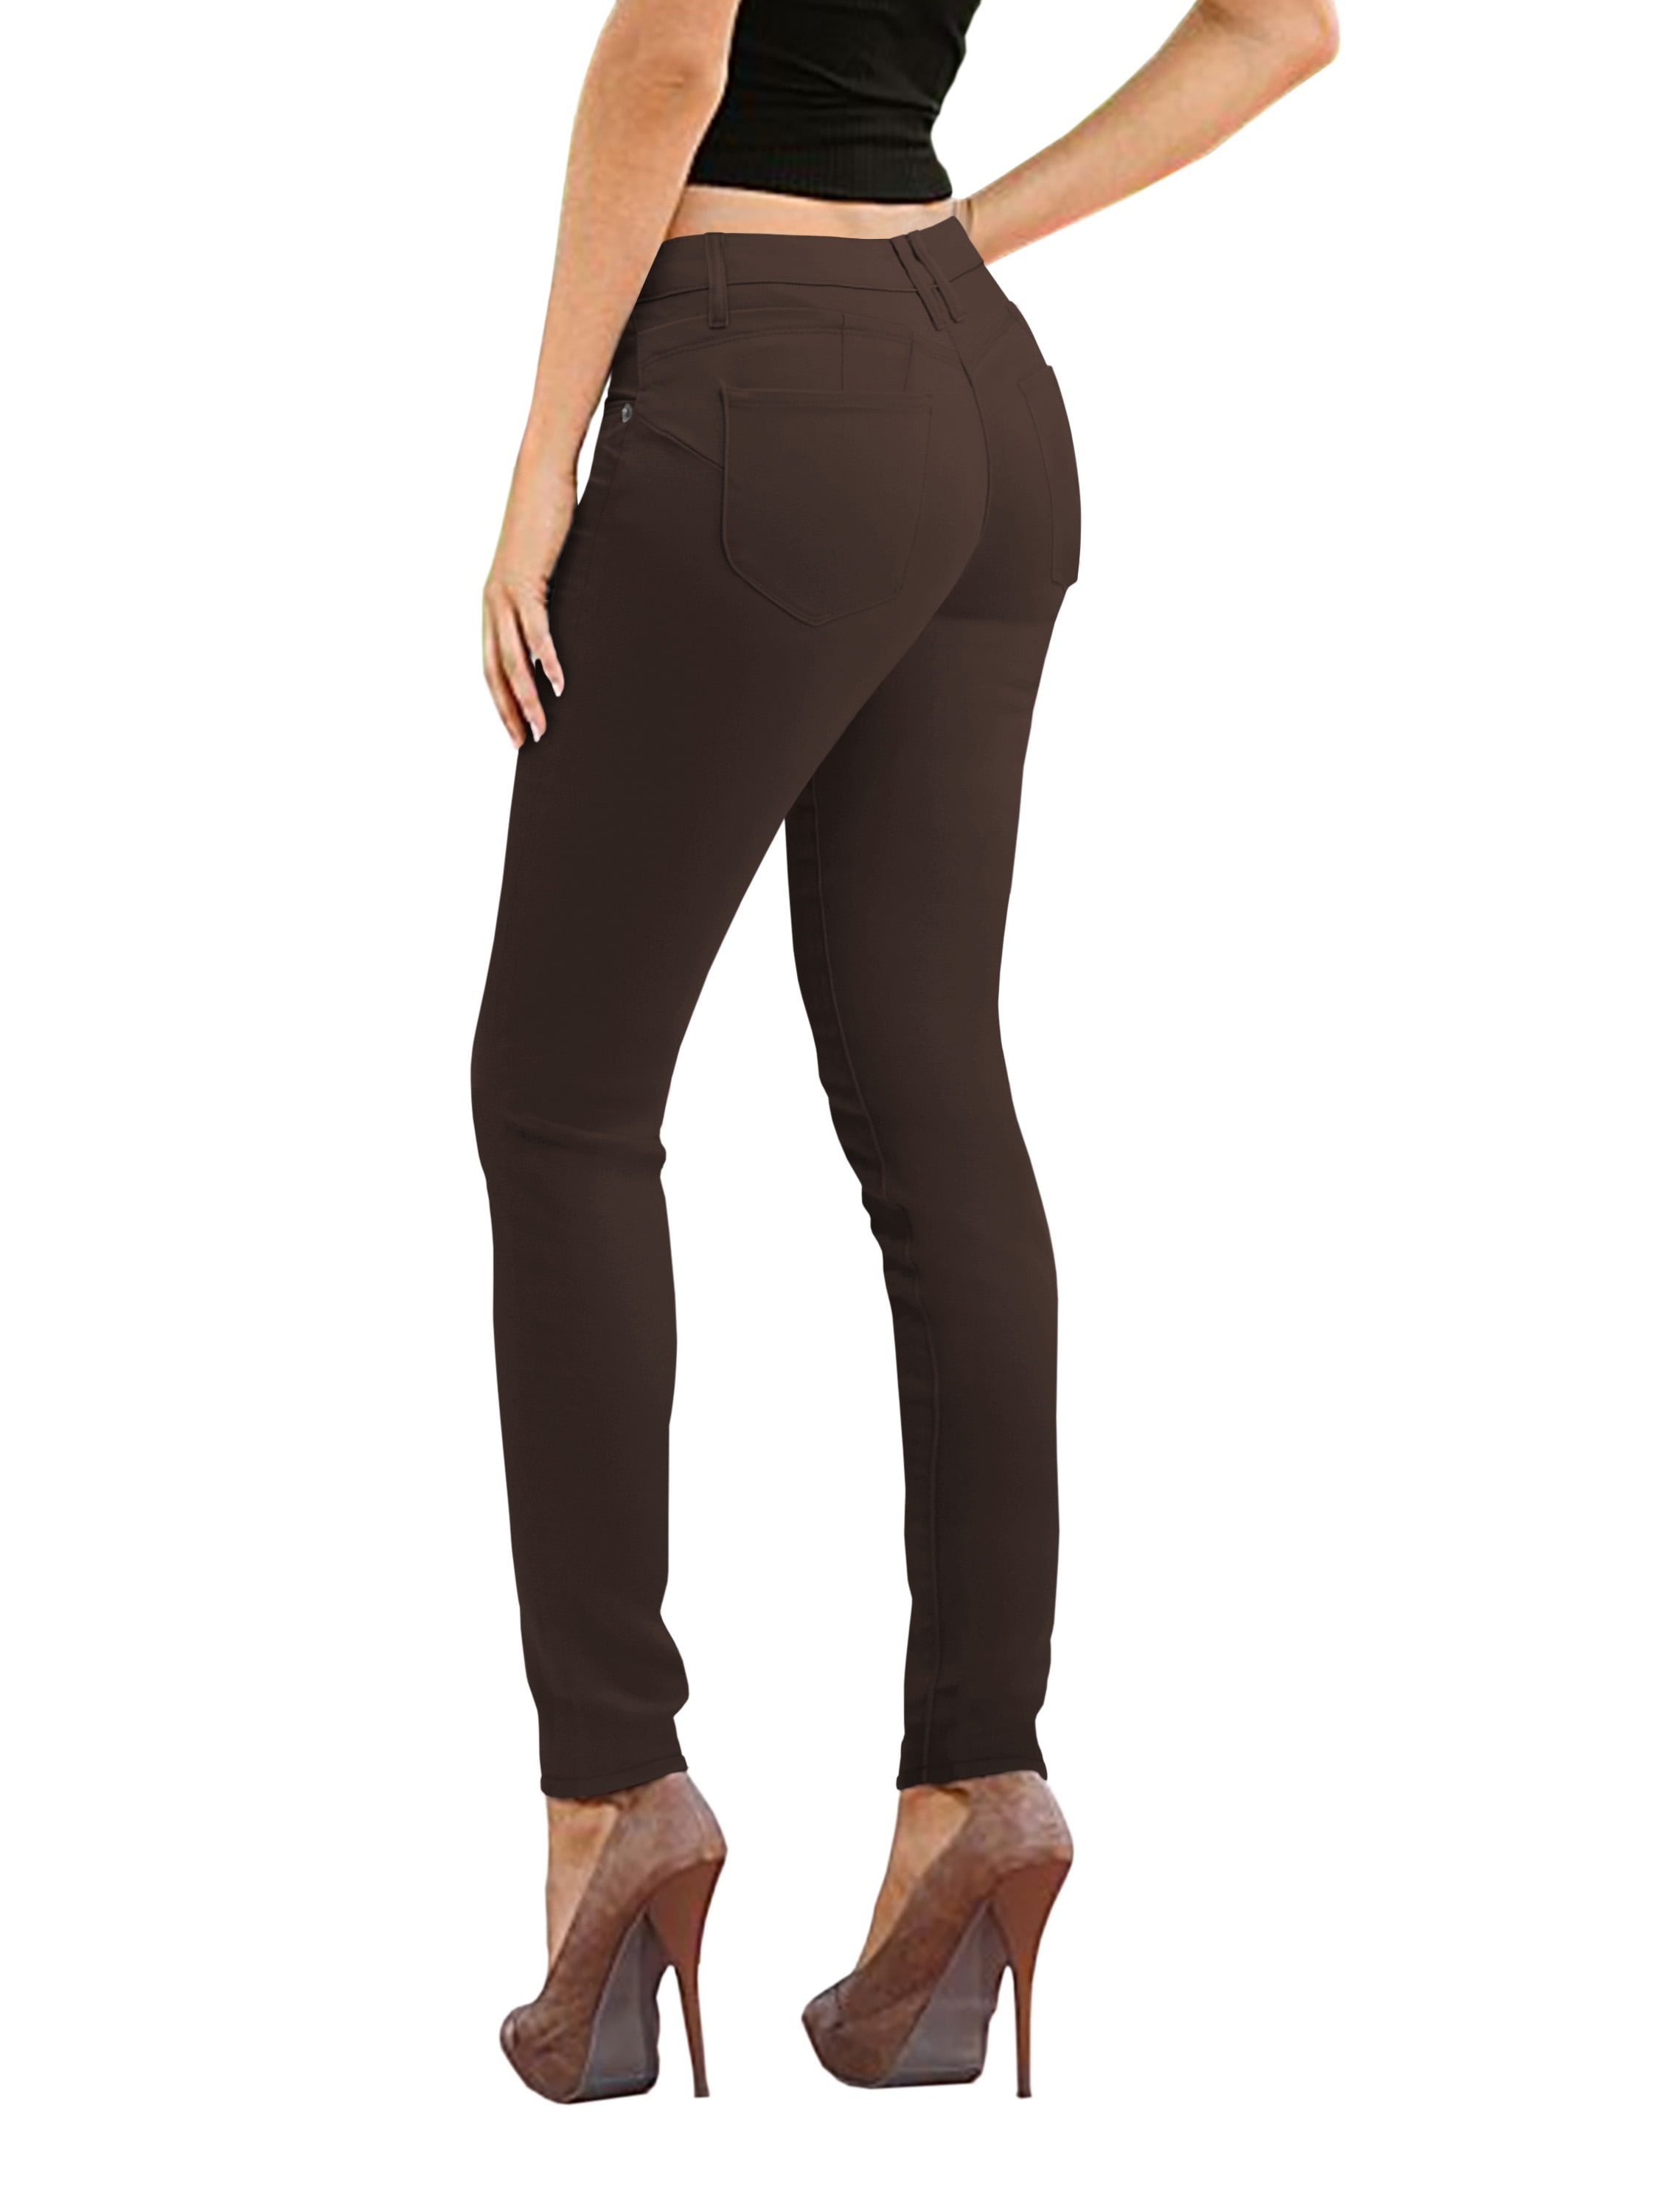 Capri HyBrid & Company Womens Butt Lift V2 Super Comfy Stretch Denim Skinny Jeans Bermuda 